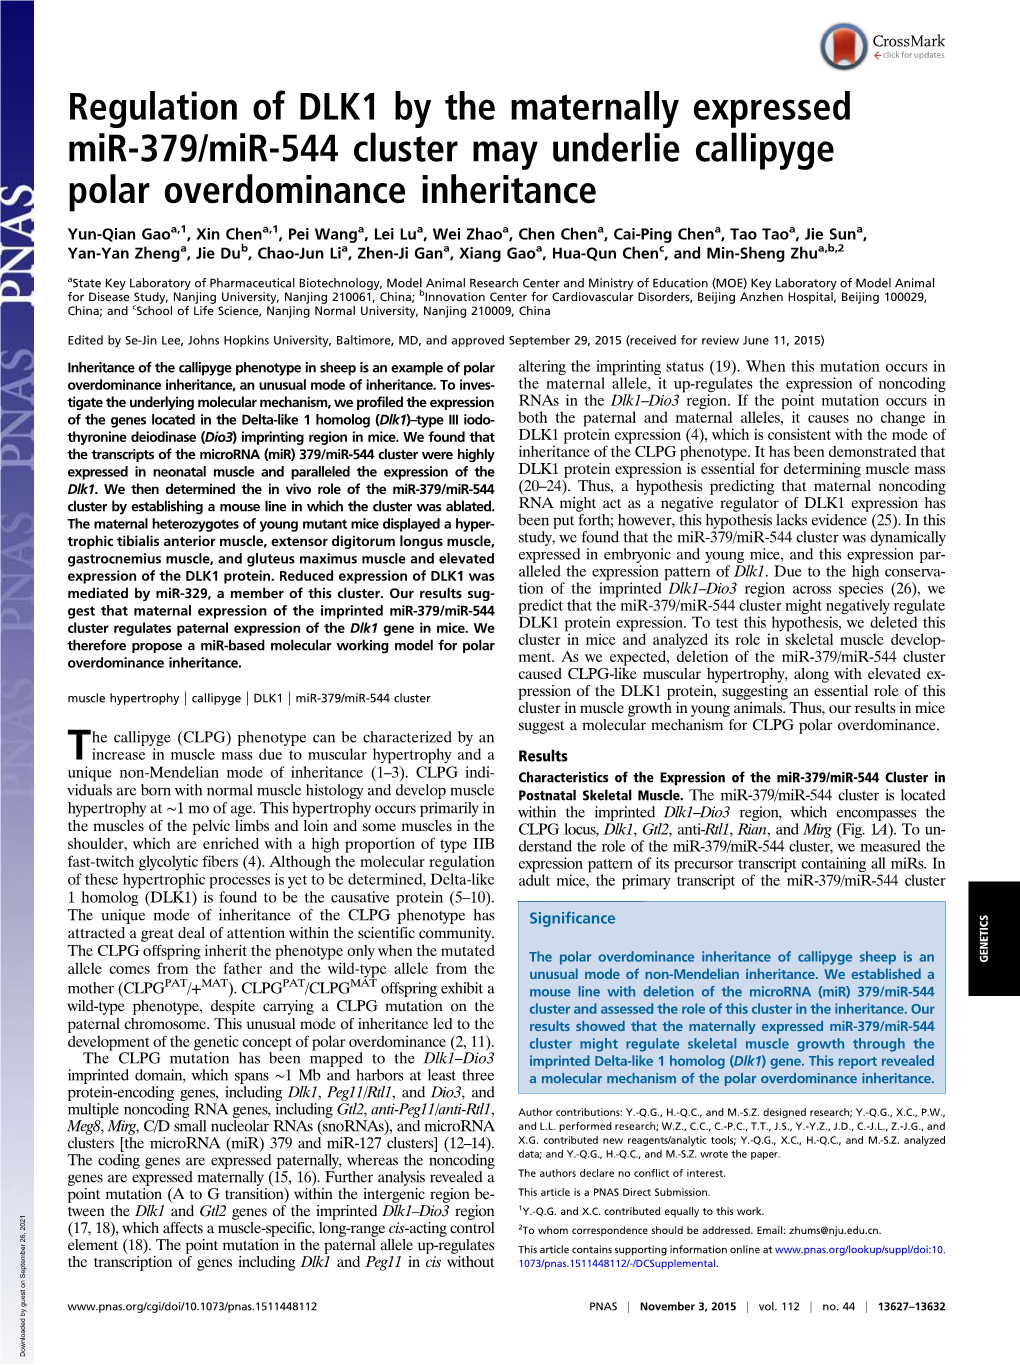 Regulation of DLK1 by the Maternally Expressed Mir-379/Mir-544 Cluster May Underlie Callipyge Polar Overdominance Inheritance